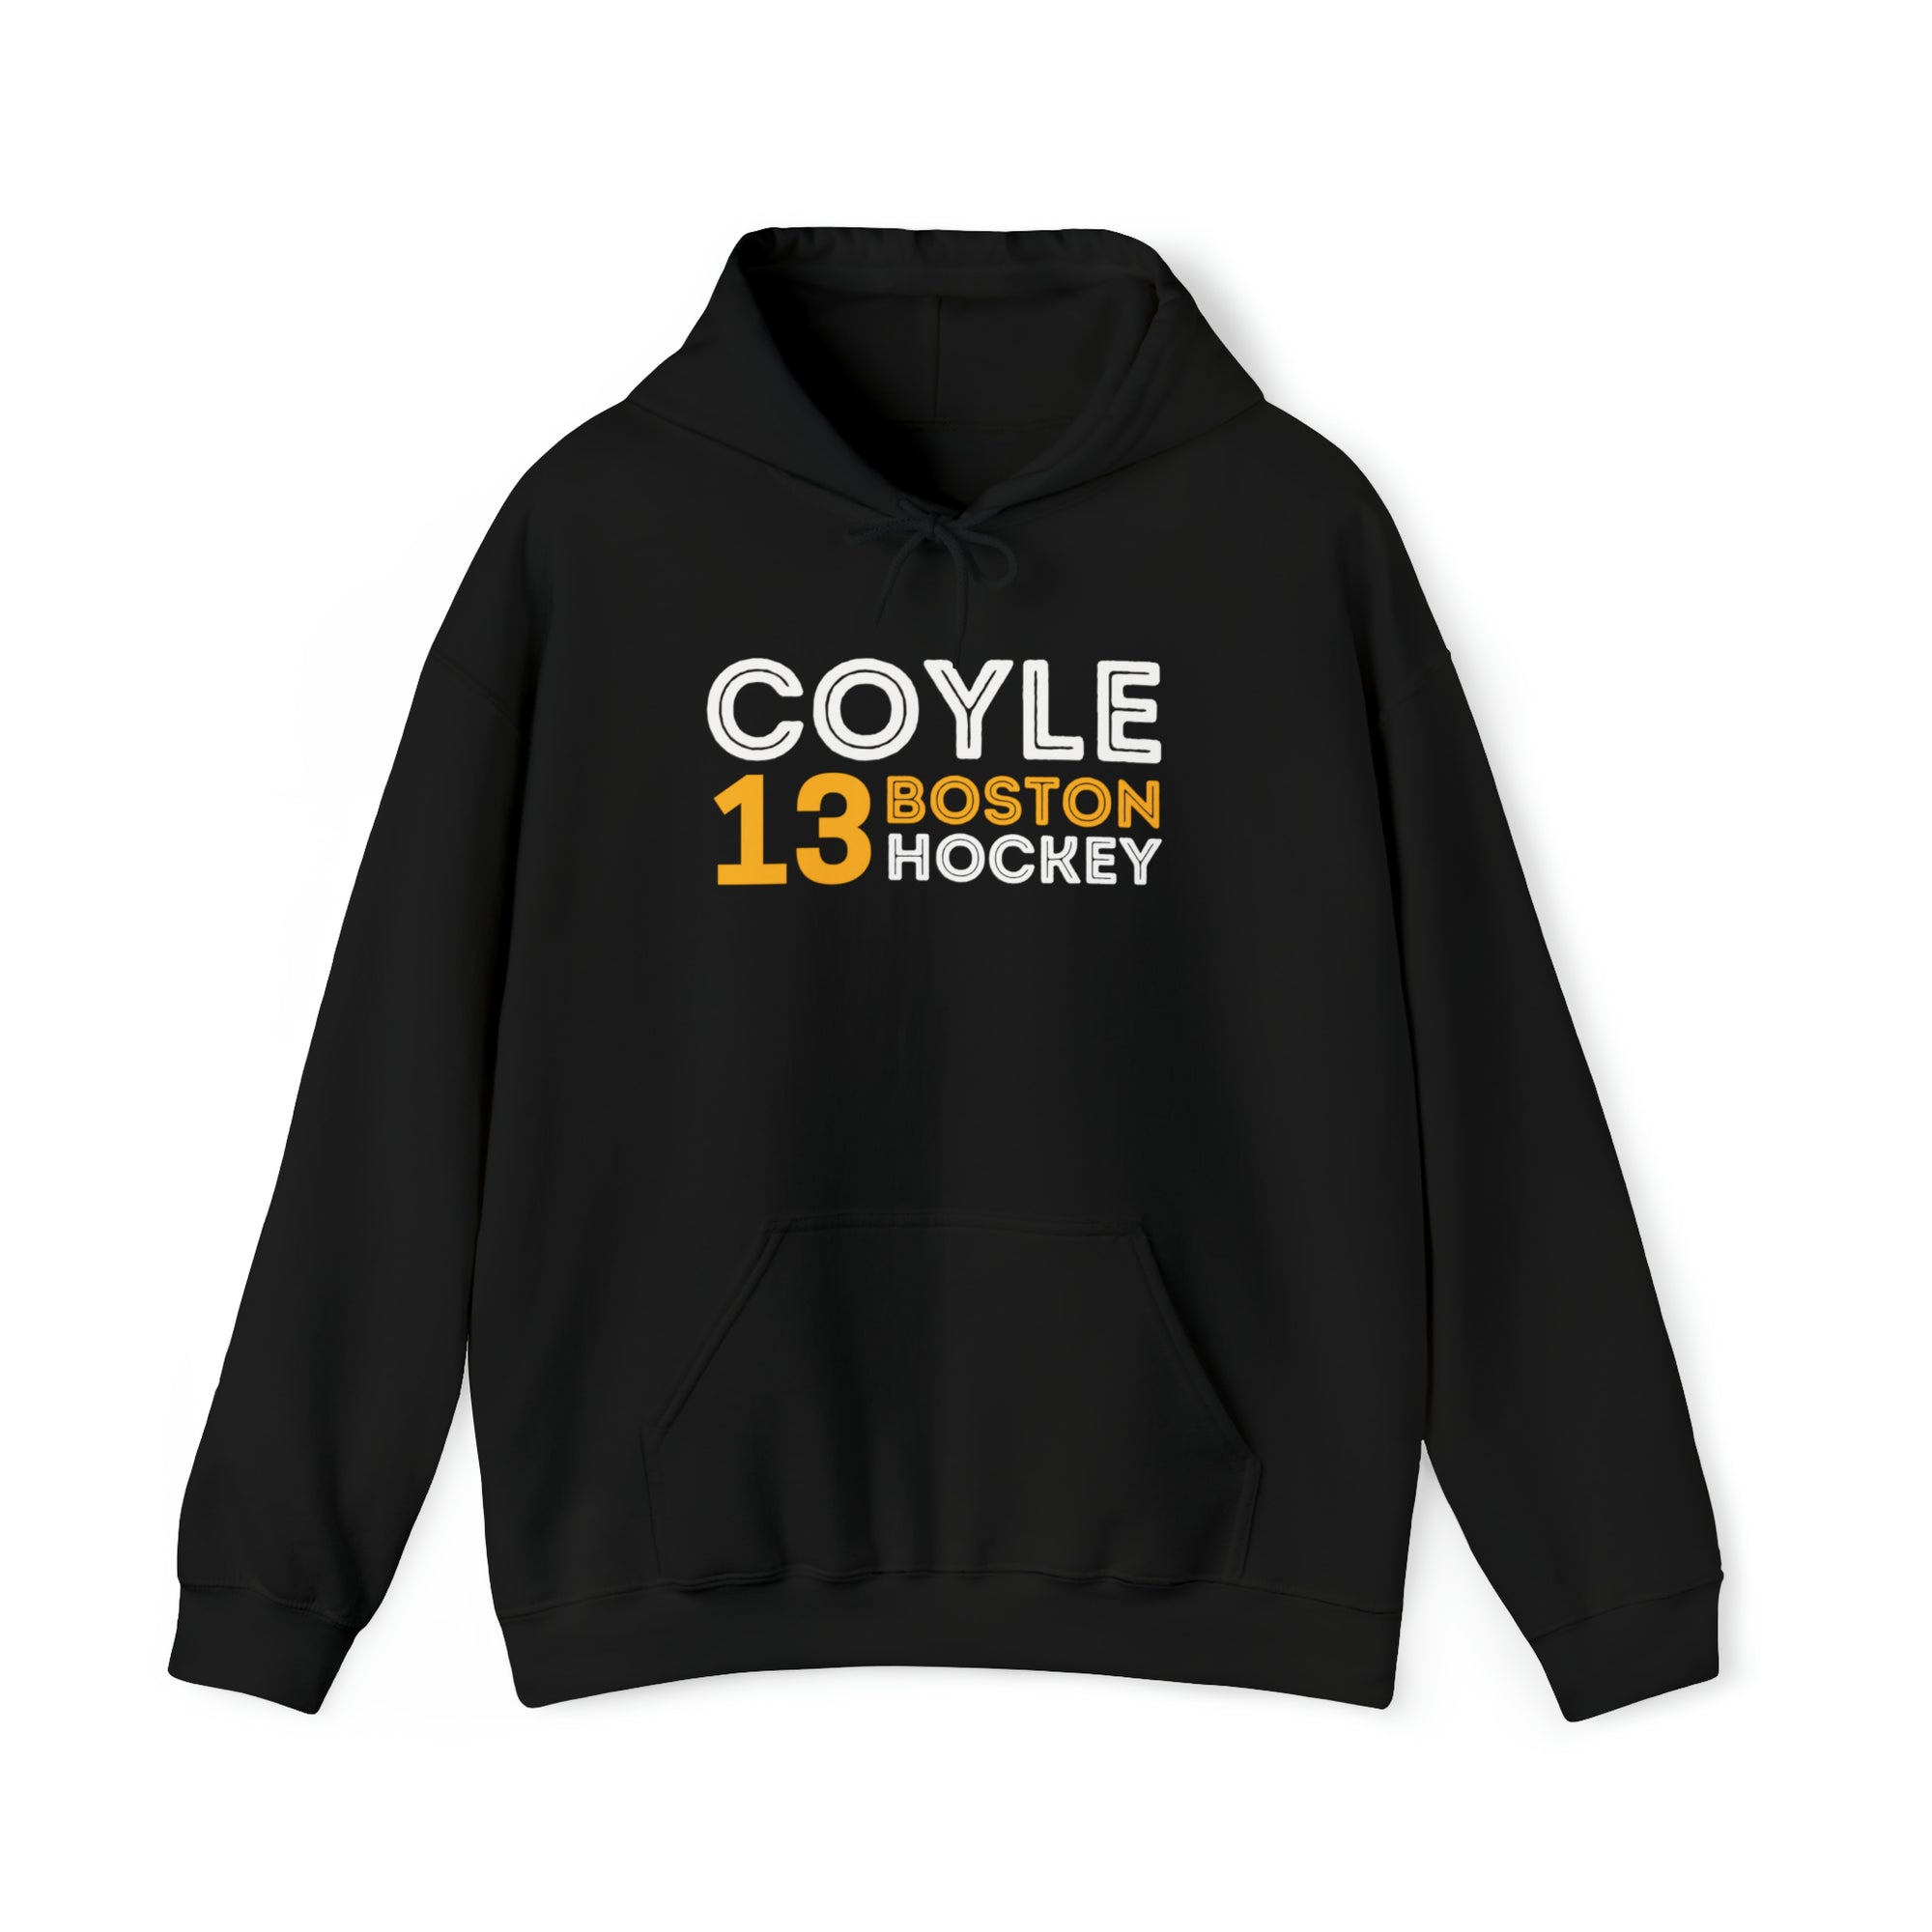 Coyle 13 Boston Hockey Grafitti Wall Design Unisex Hooded Sweatshirt